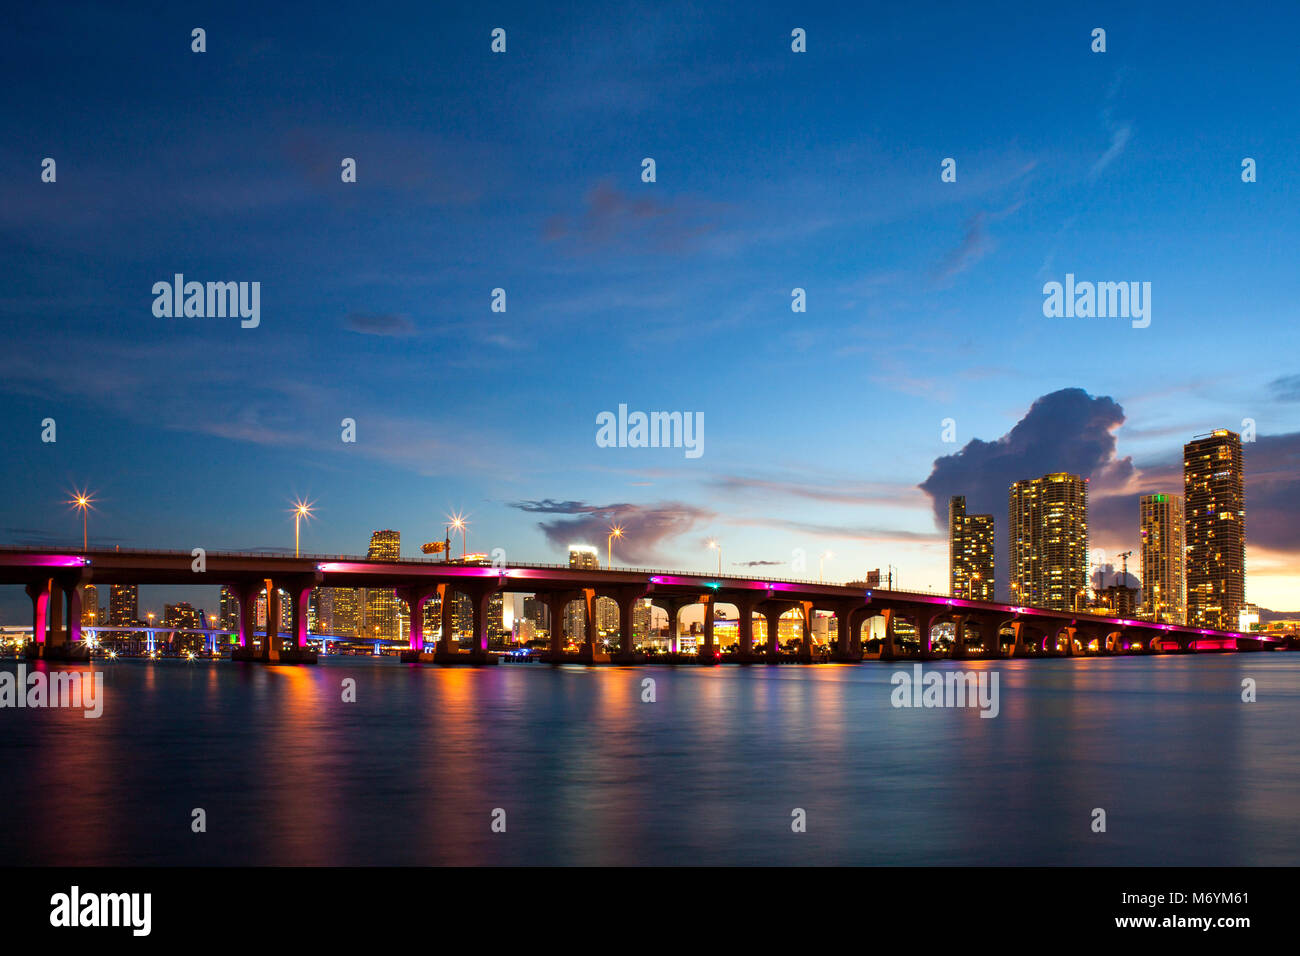 View of MacArthur Causeway bridge in Miami at night over water. Stock Photo